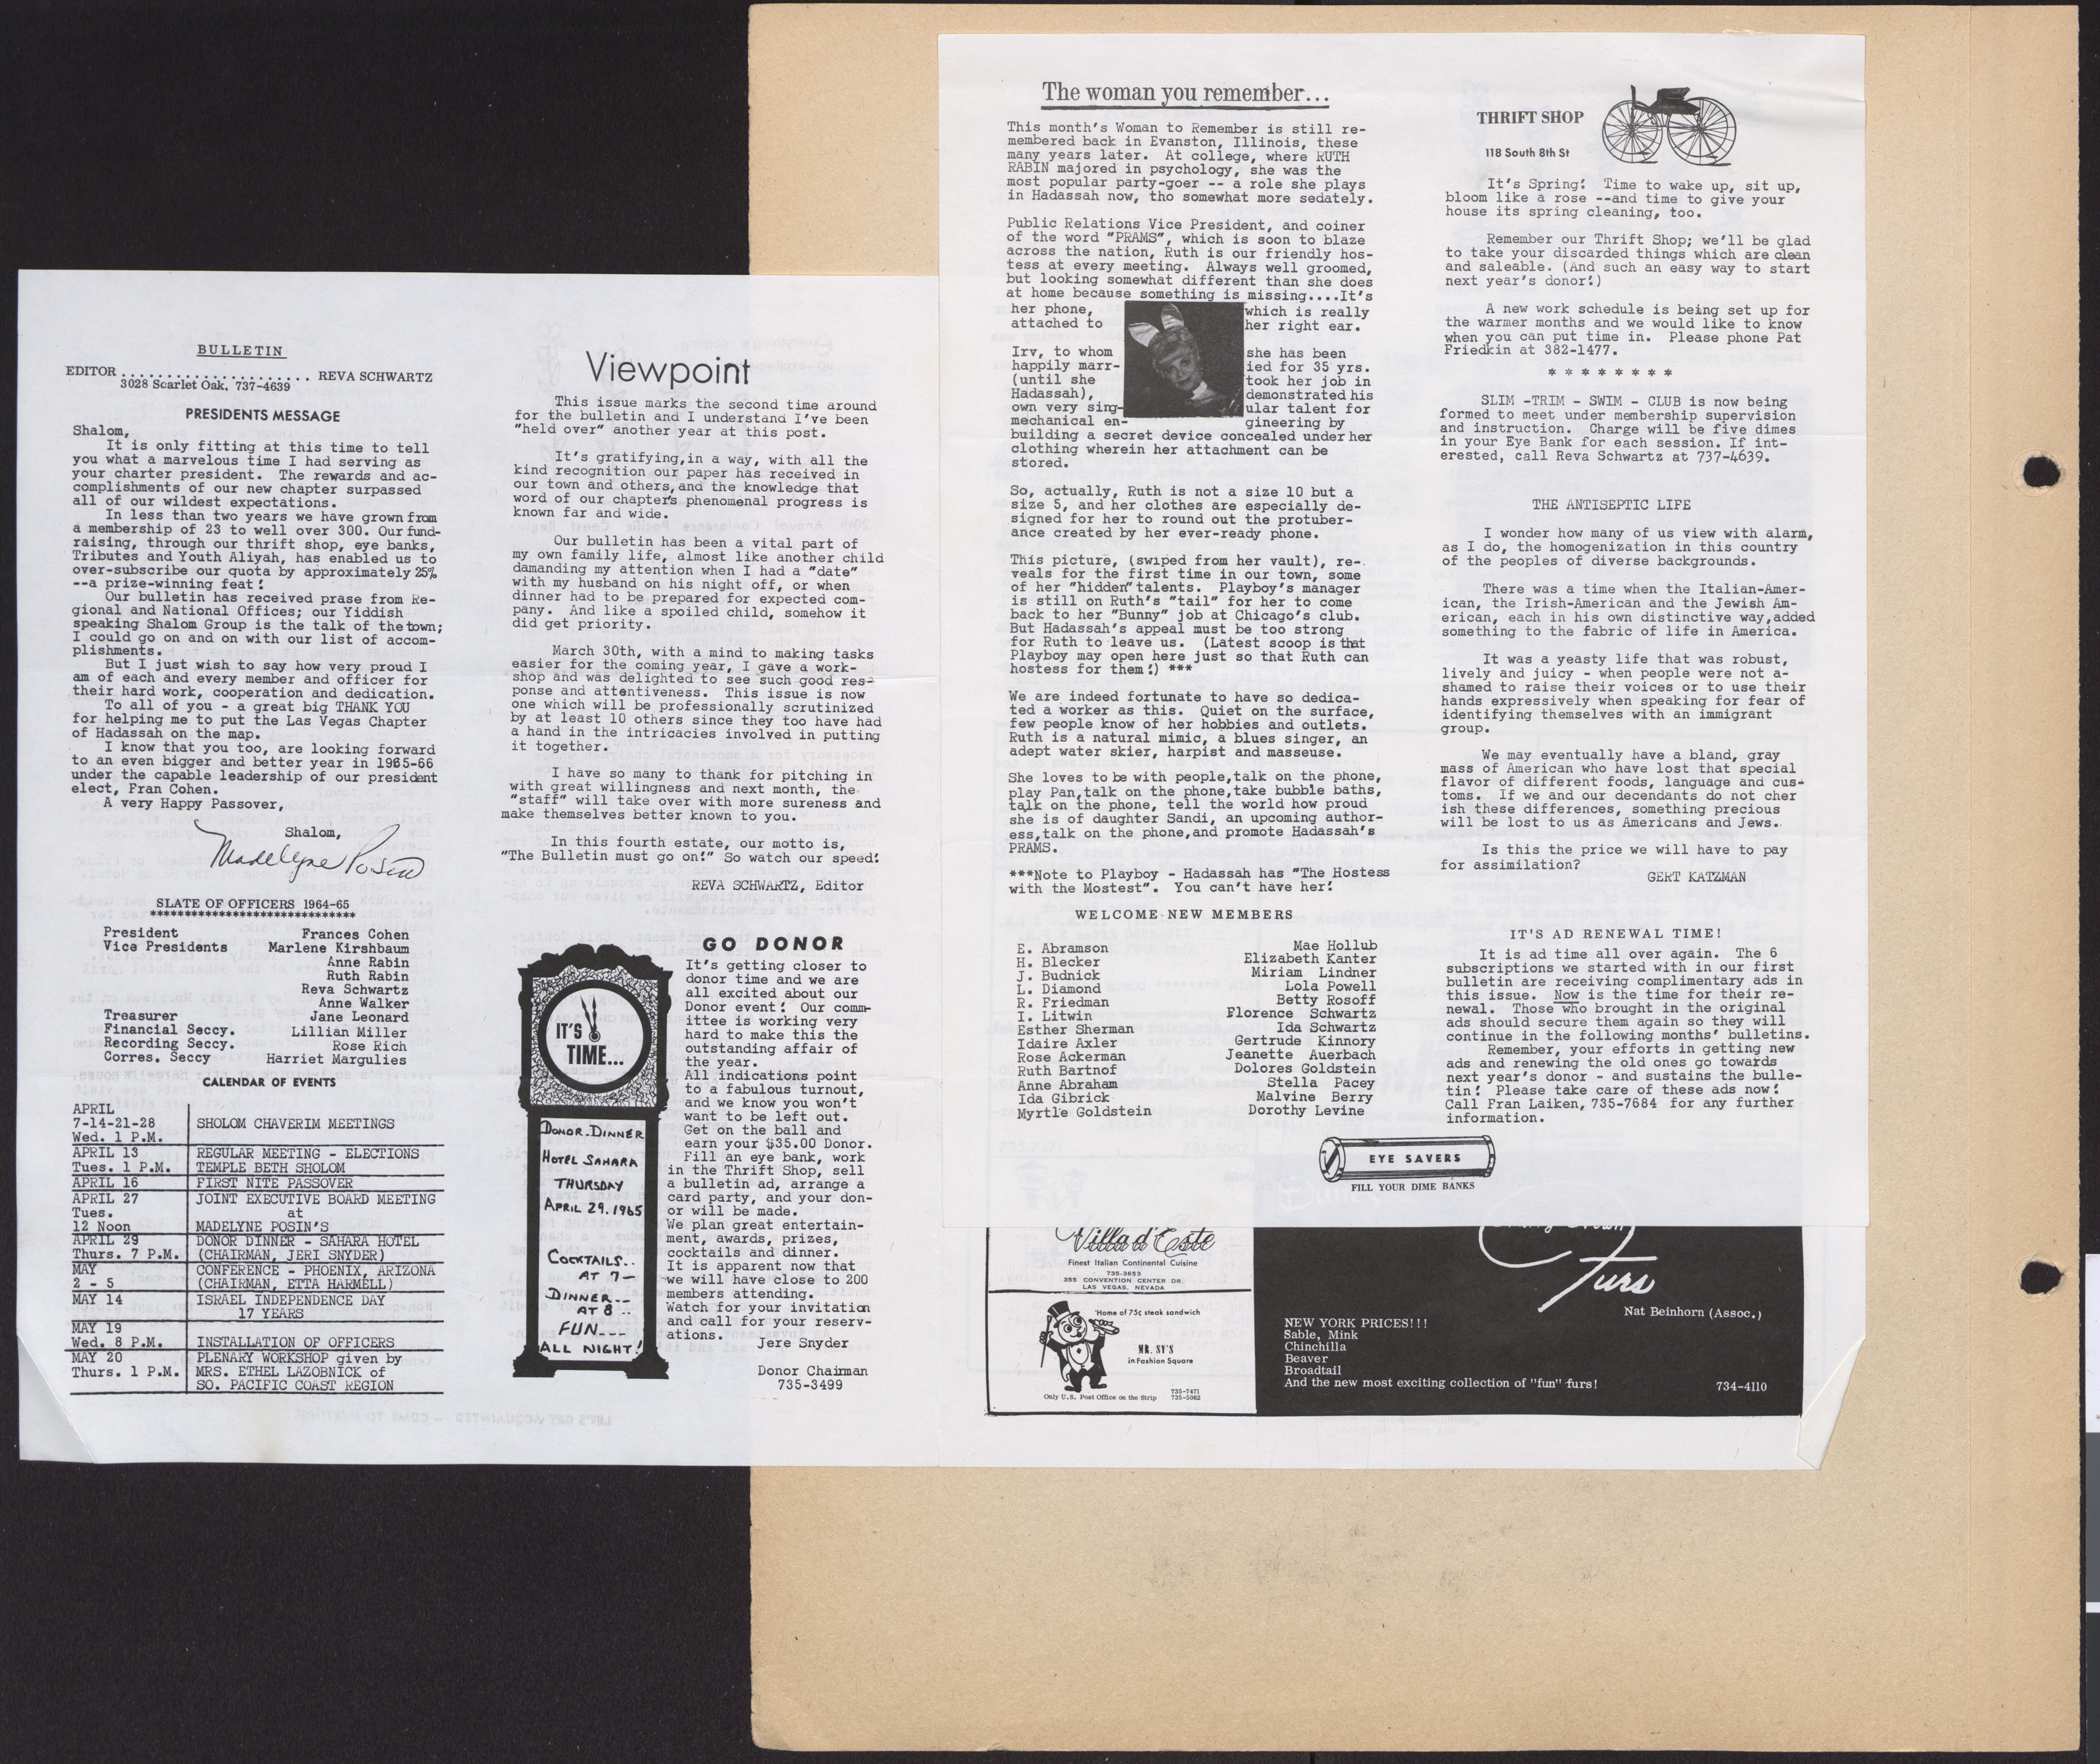 Hadassah Las Vegas Chapter newsletter, April 1965, page 2-3